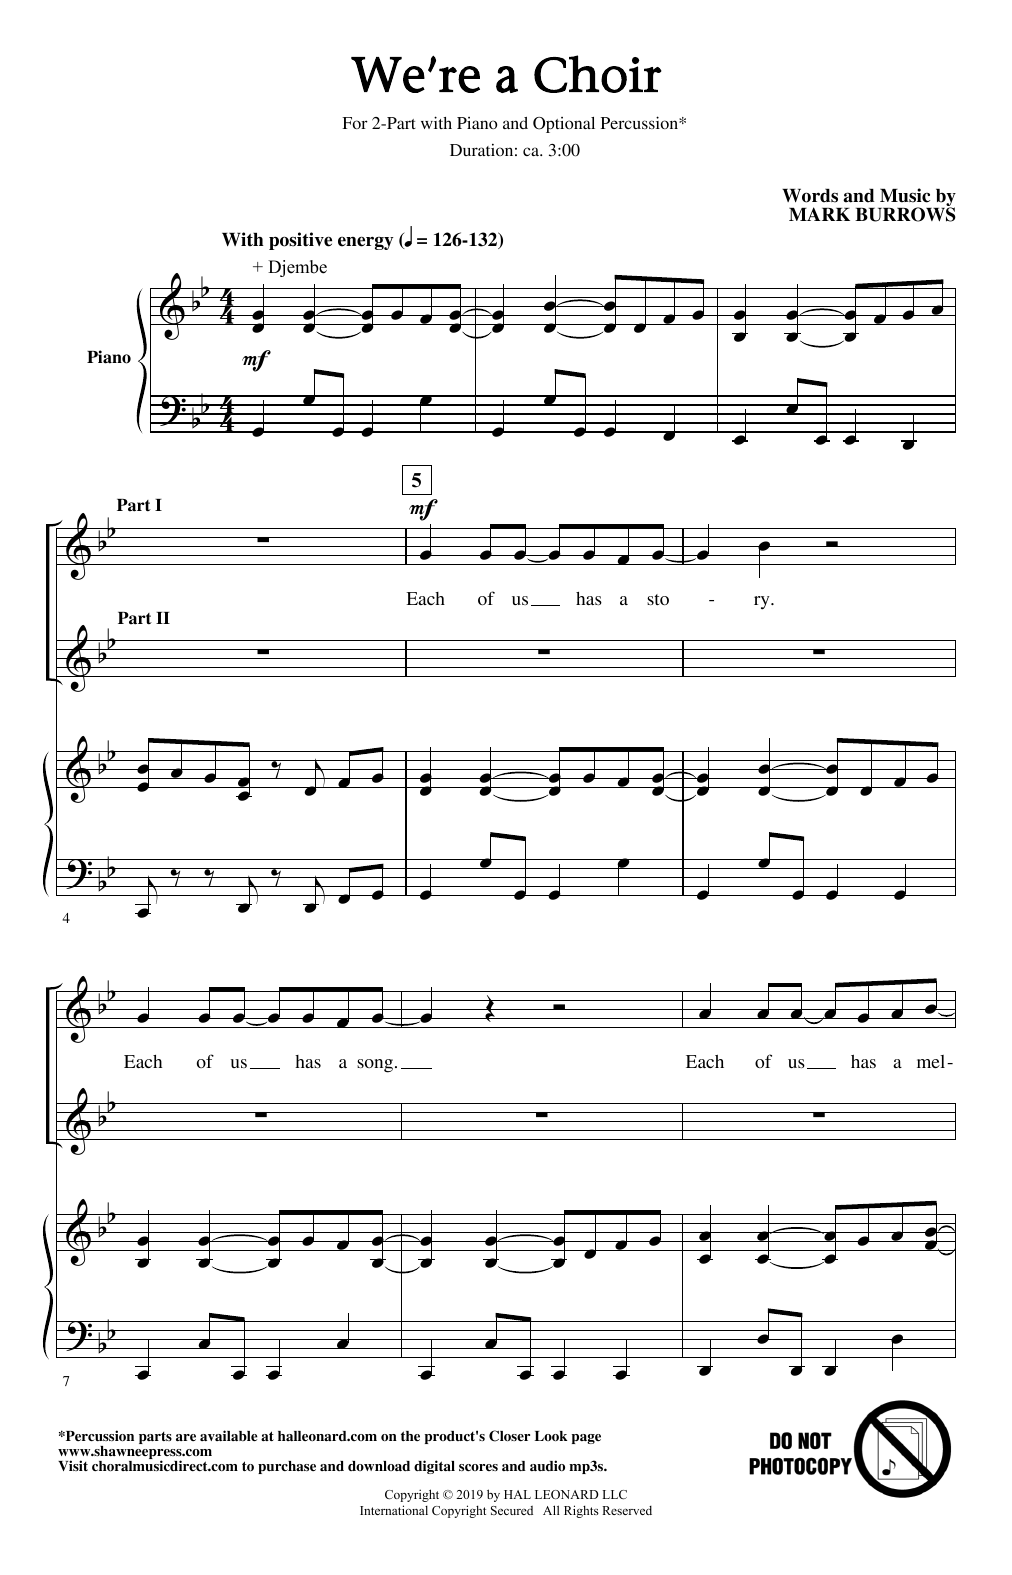 Mark Burrows We're A Choir! Sheet Music Notes & Chords for 2-Part Choir - Download or Print PDF